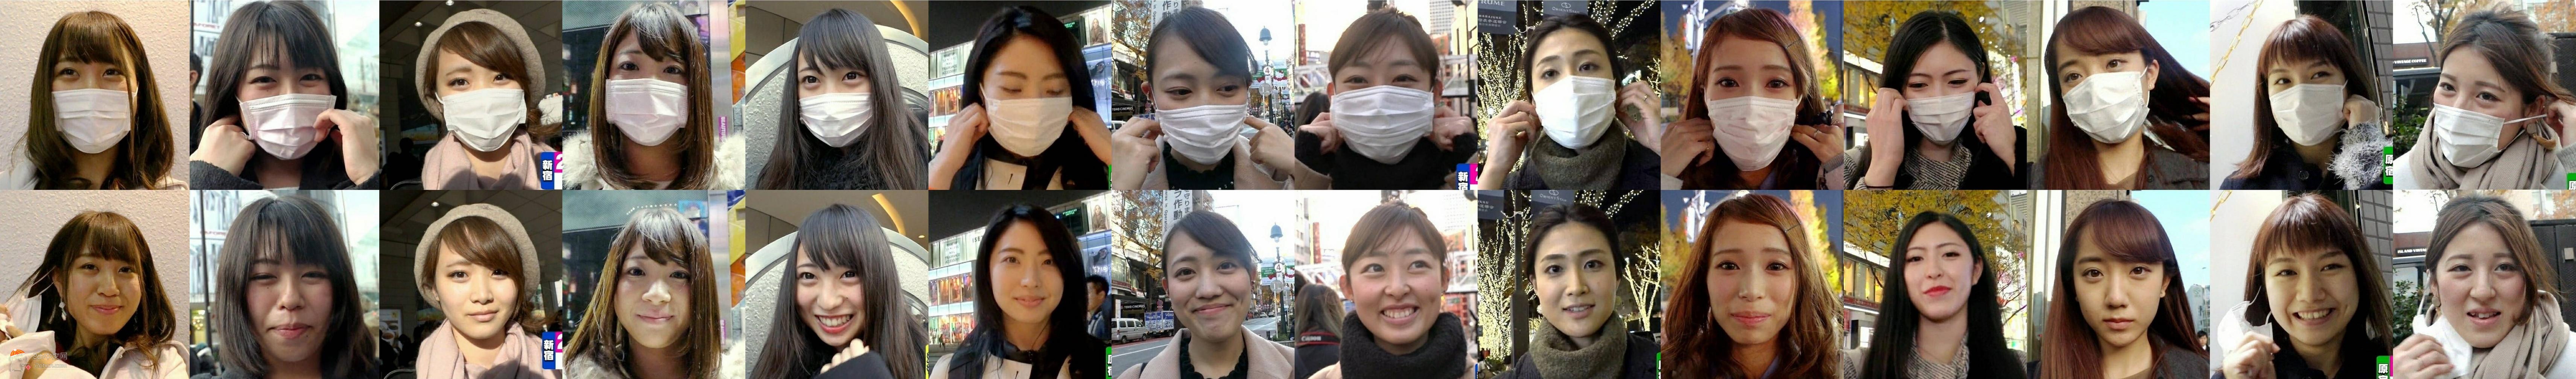 2ch：日本妹子摘掉口罩后，所有人的分数都下降了